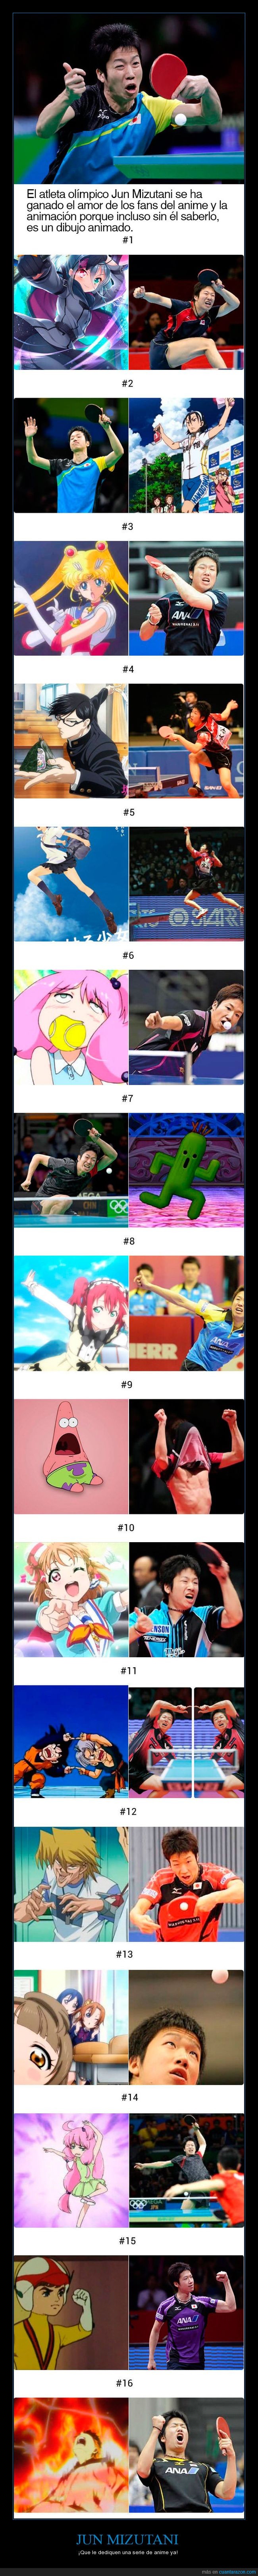 Jun mizutani,ping pong,olimpico,olimpiadas,anime,cactilio,animacion,patricio,salto